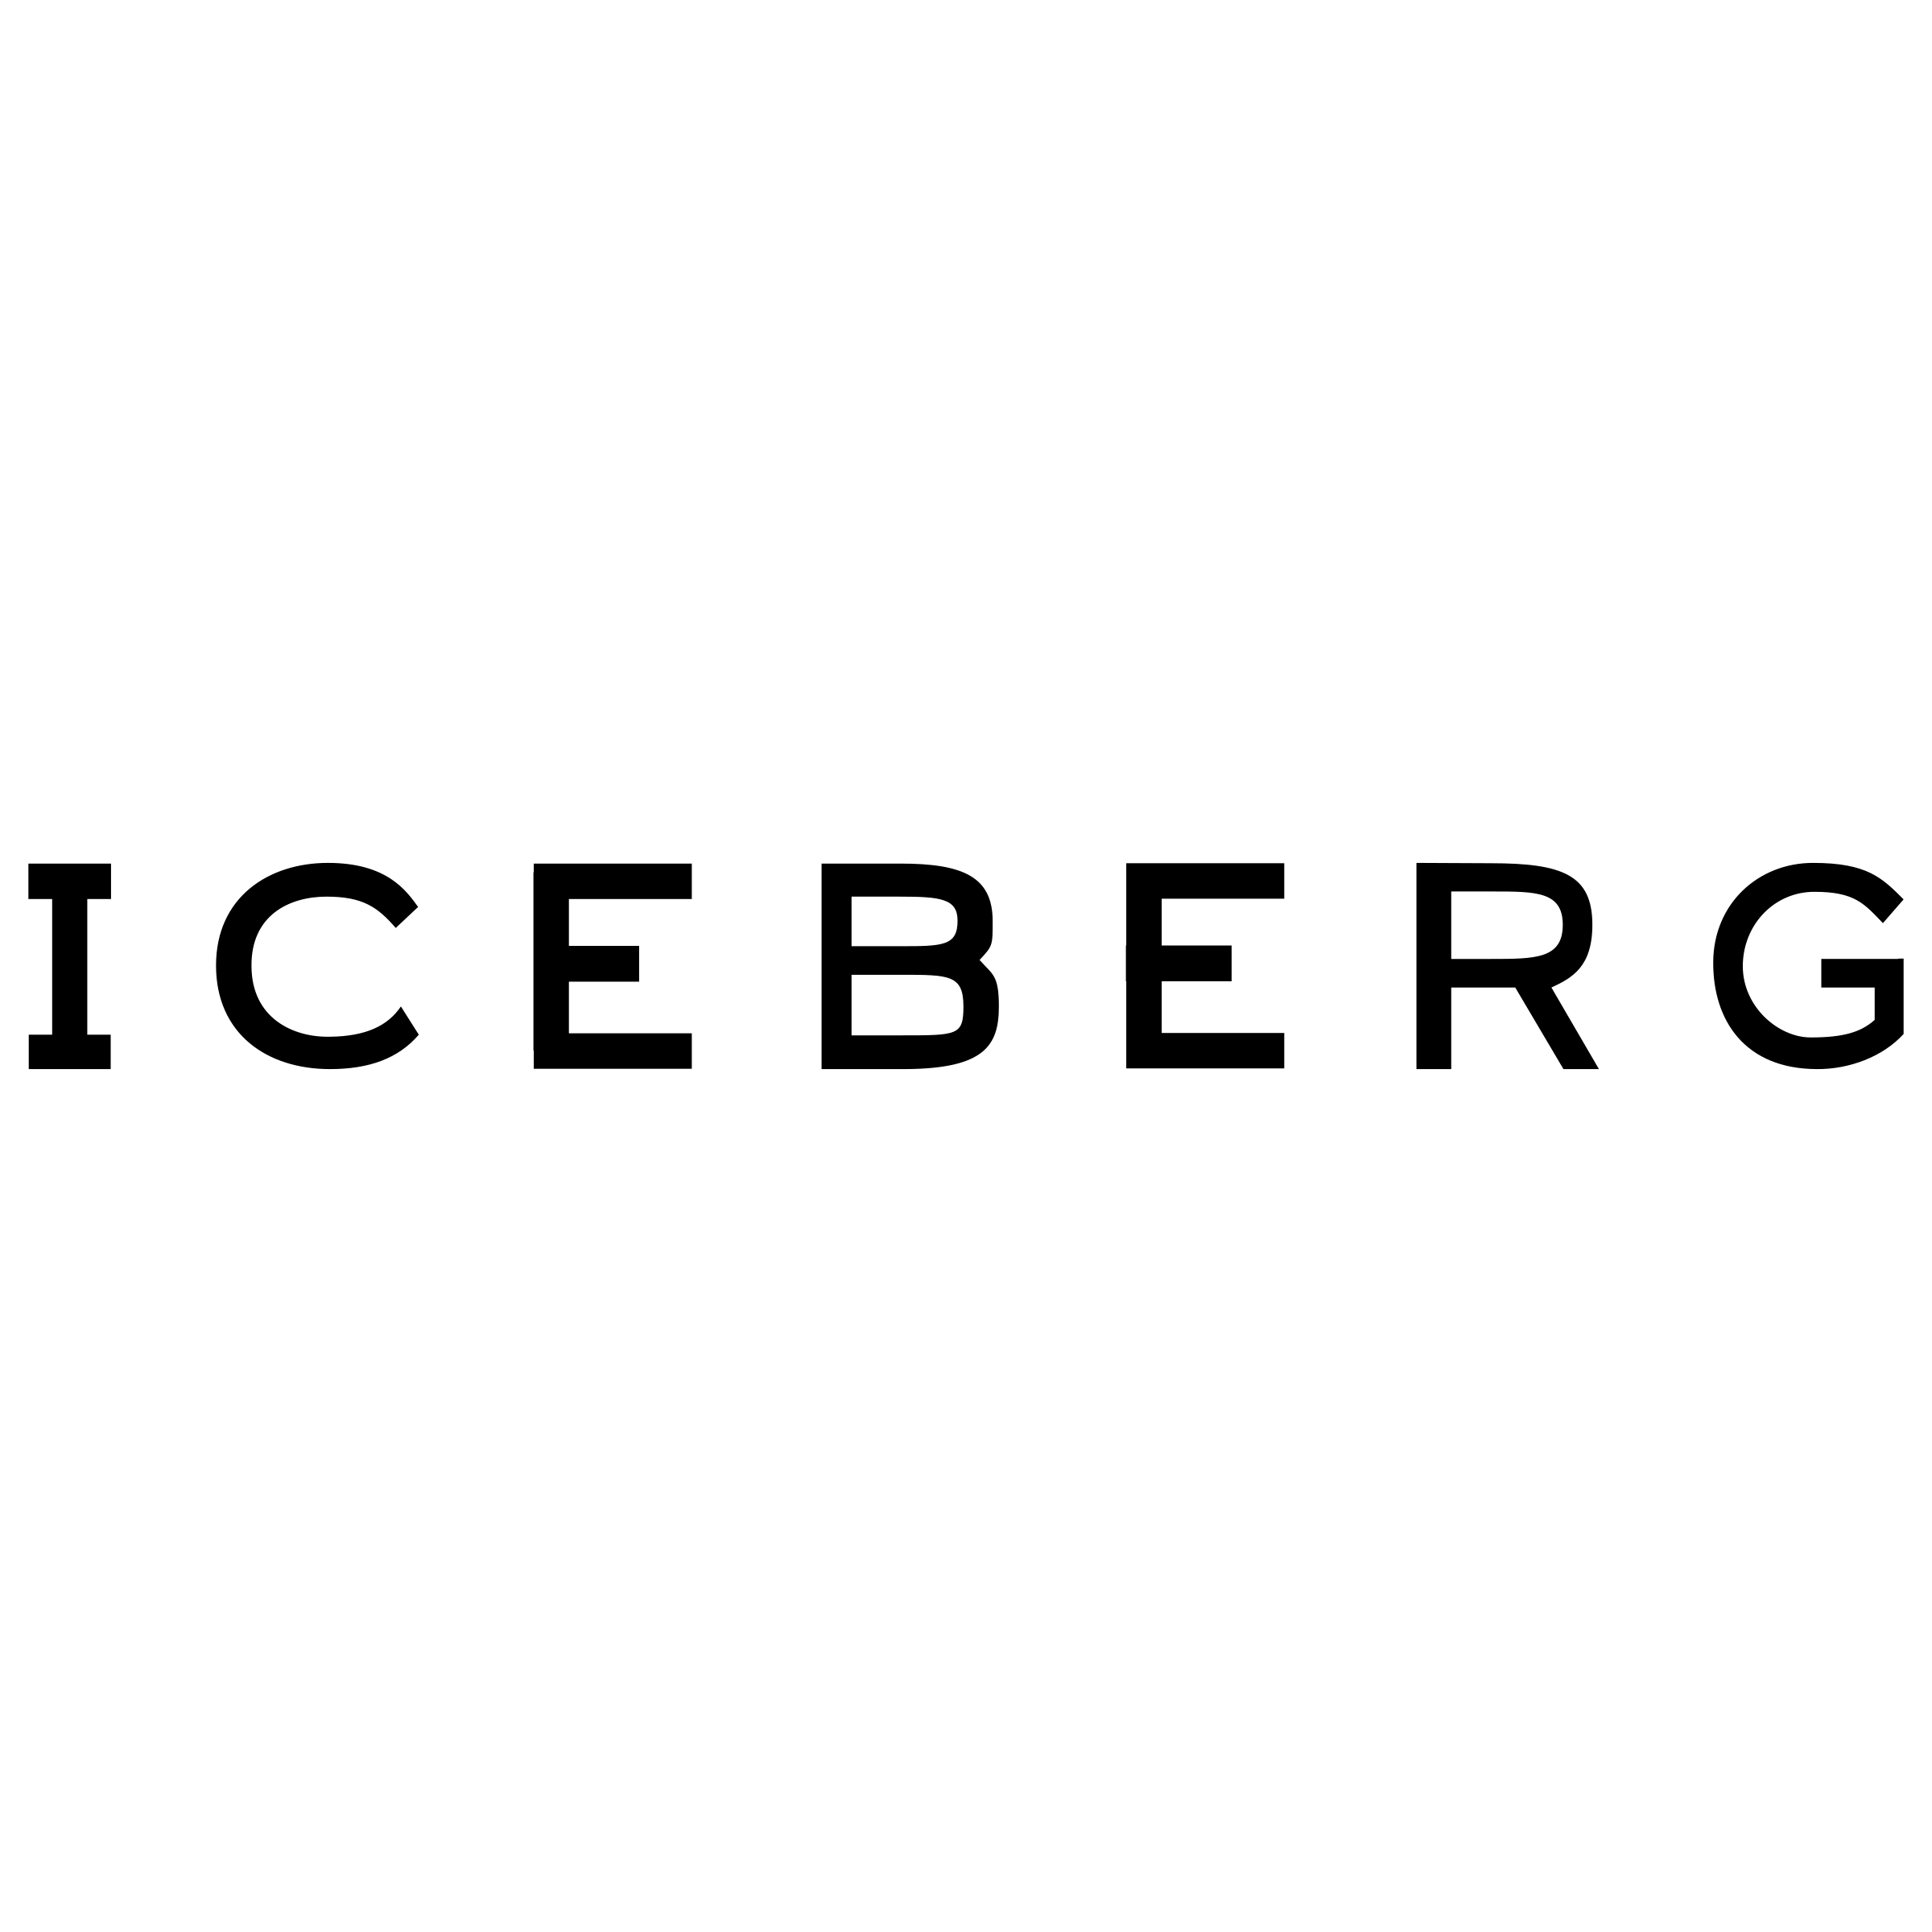 Iceberg Logo - Iceberg Logo PNG Transparent & SVG Vector - Freebie Supply